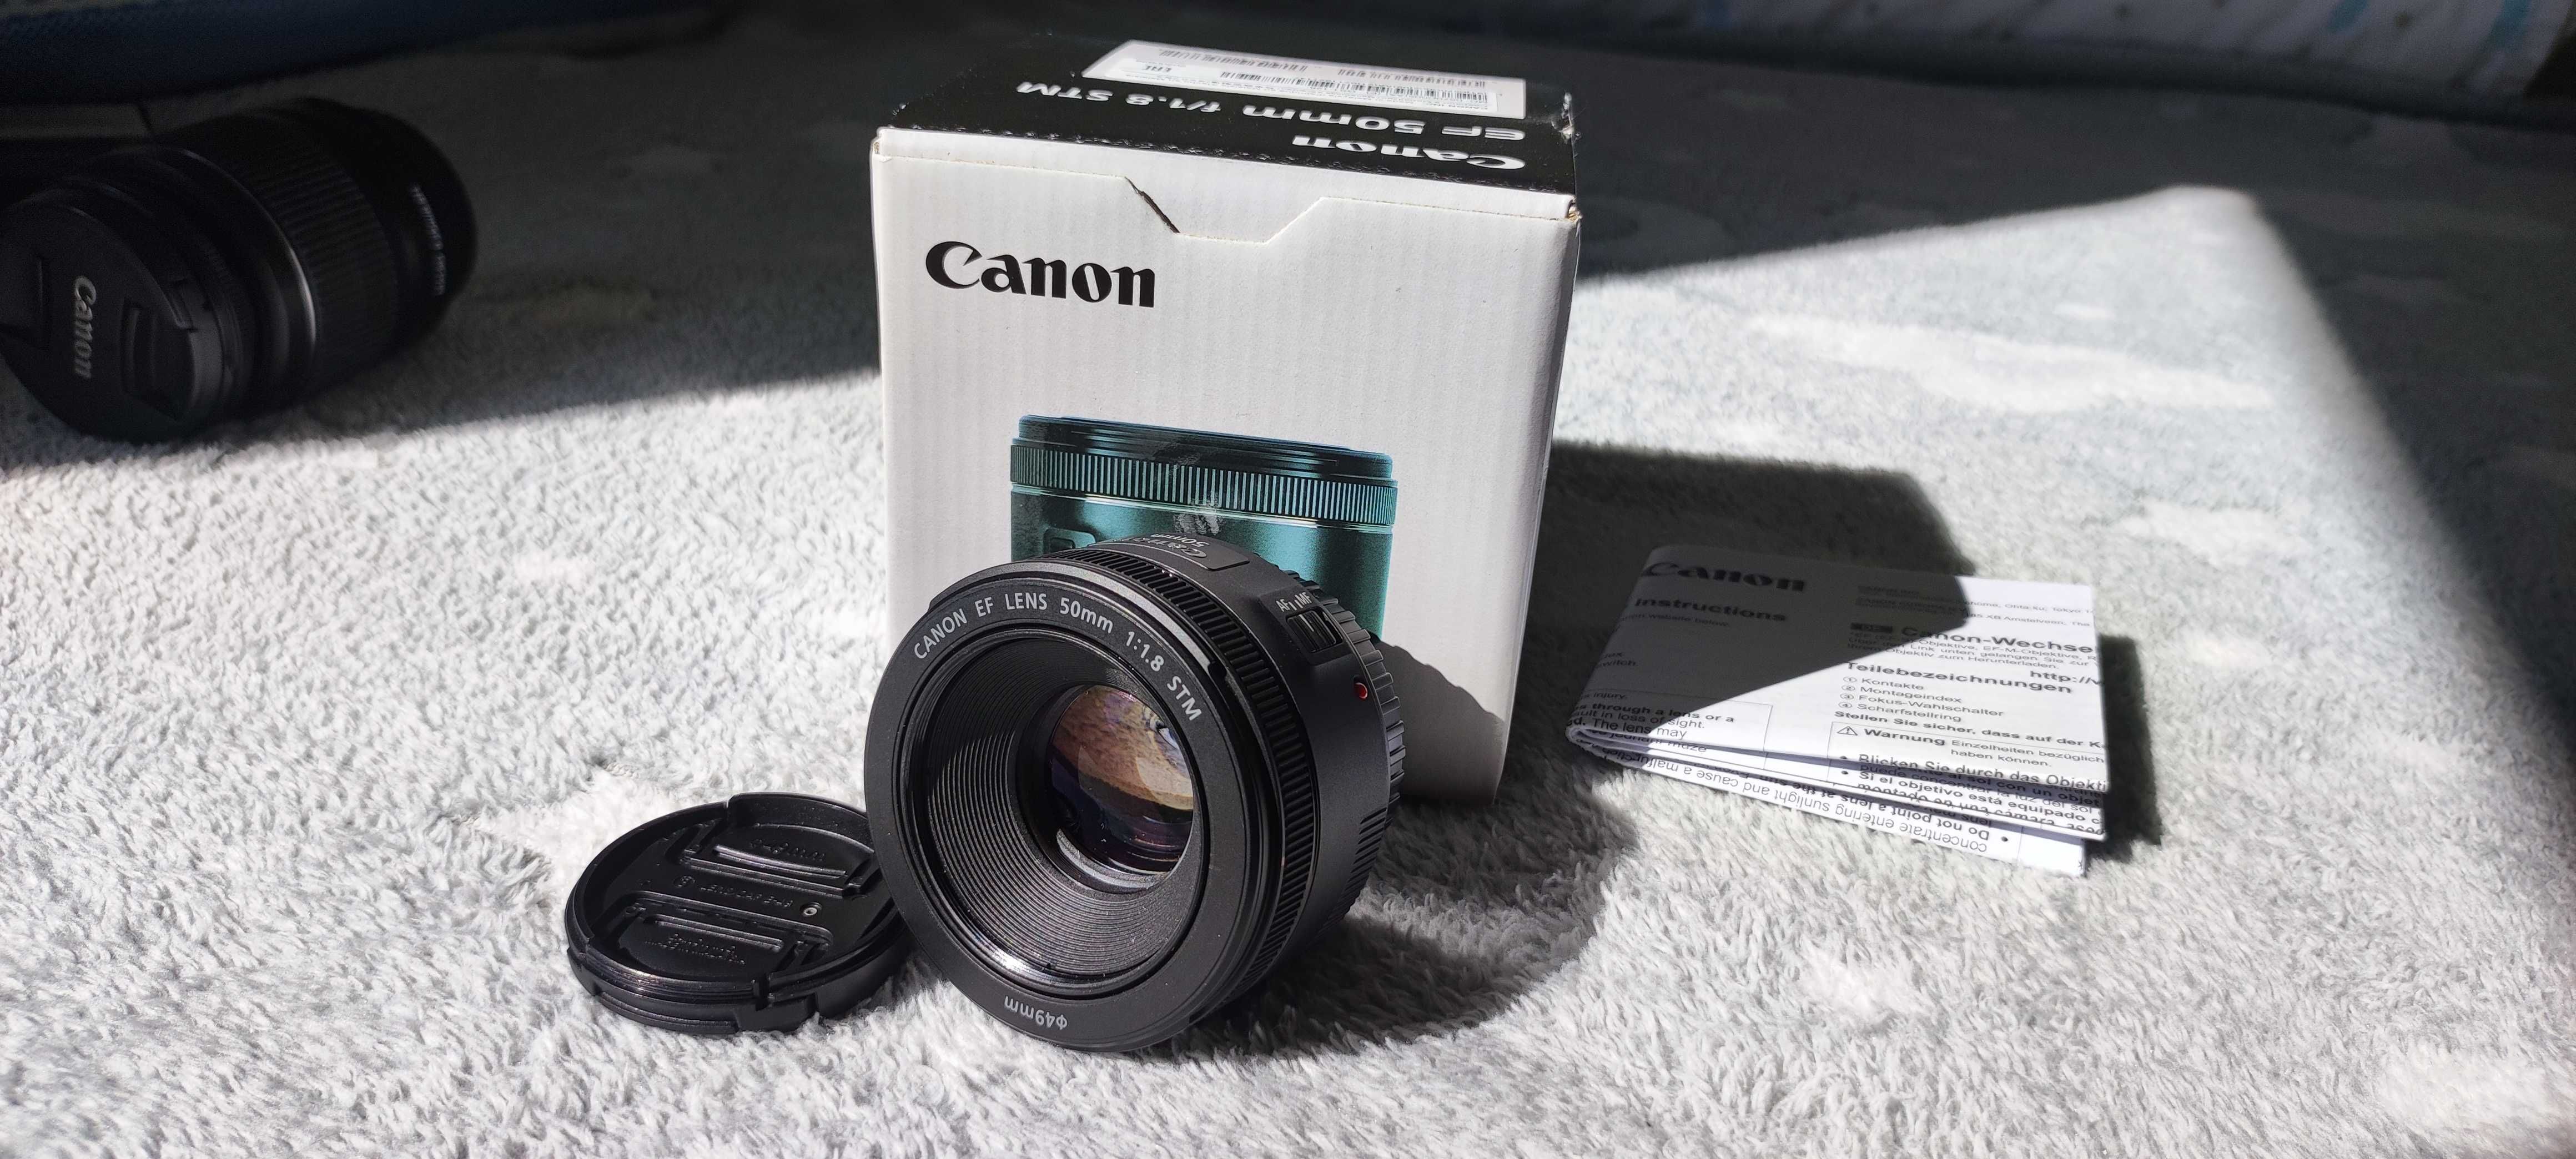 Продавам Canon 600D с два обектива и бонус аксесоари